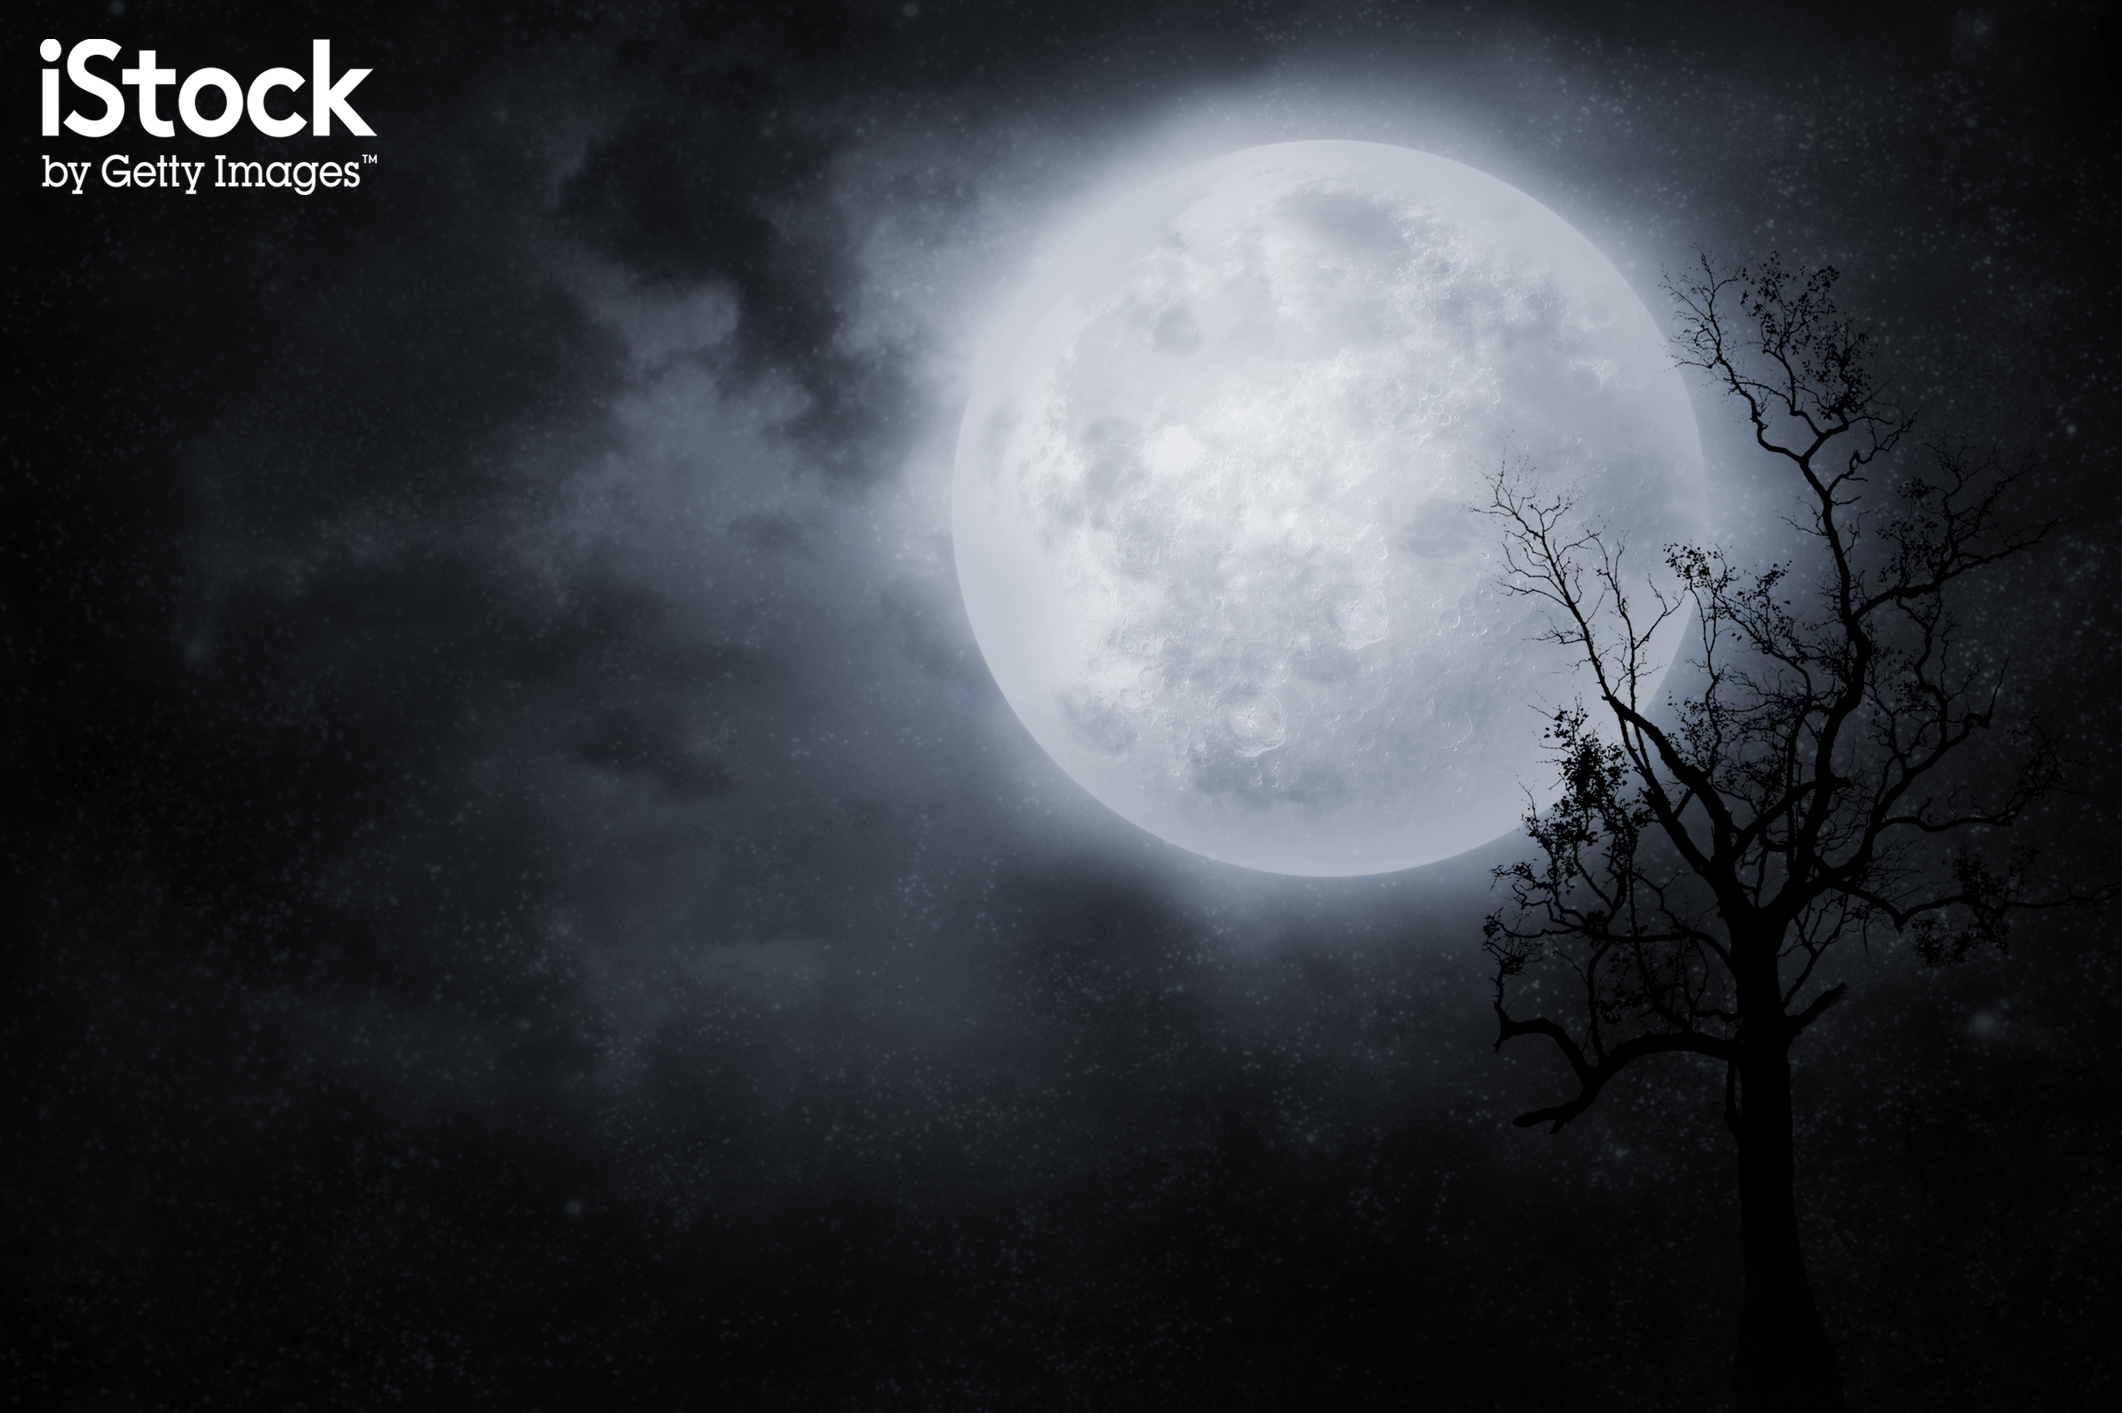 Spooky moon image